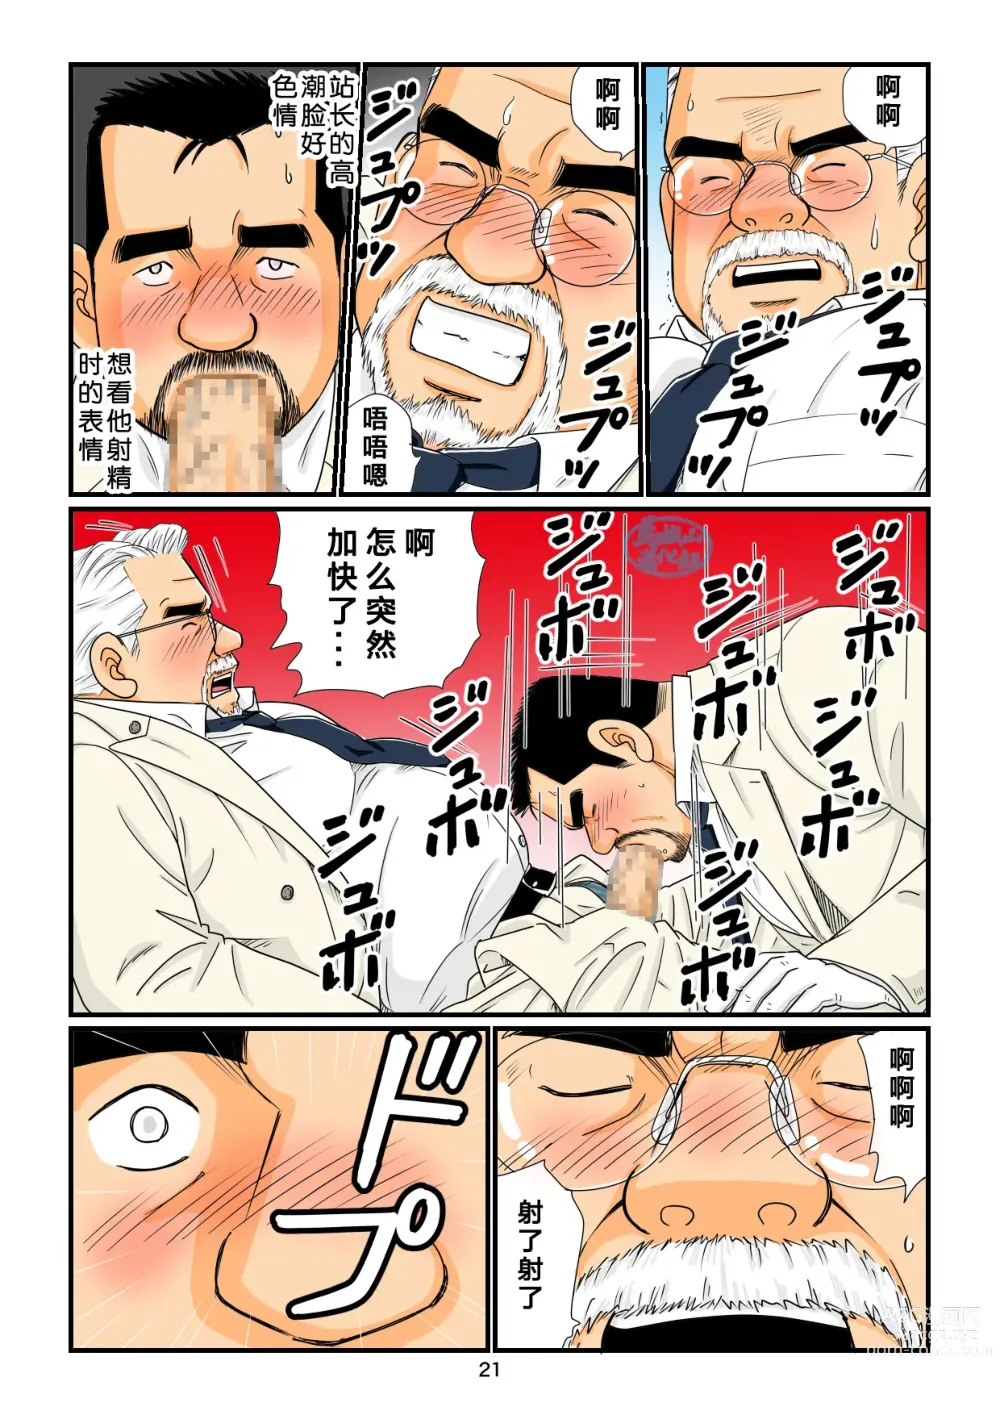 Page 21 of manga 「铁道员的浪漫」 第三回 站长与铁道员之夜